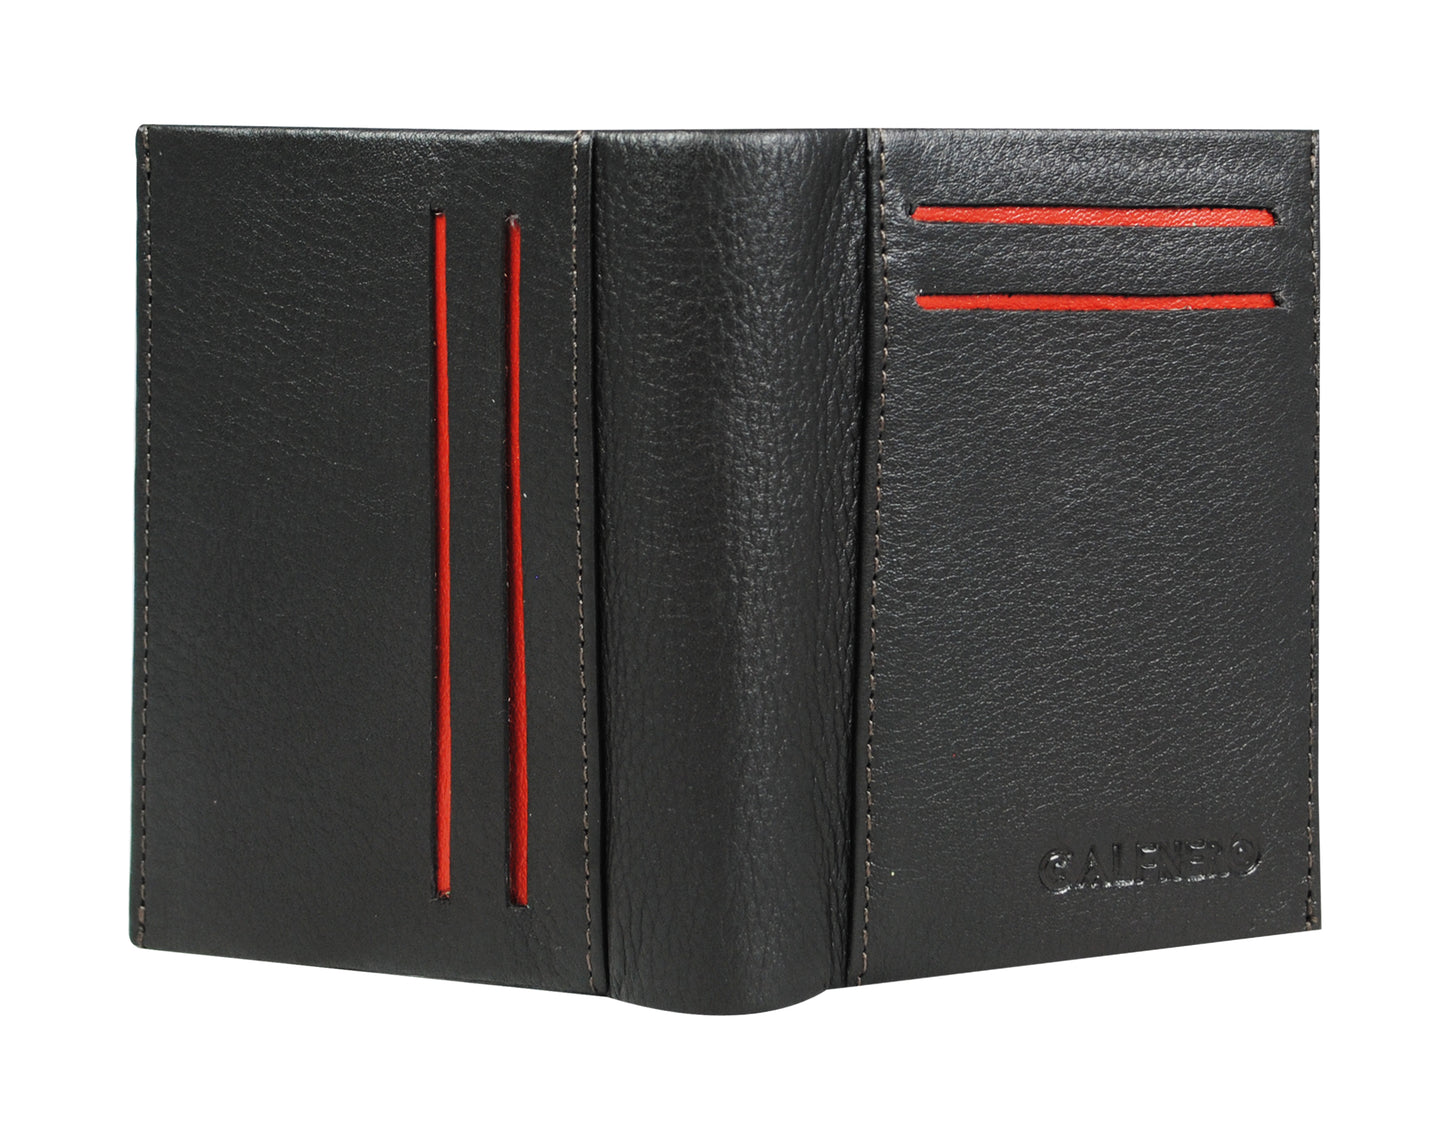 Calfnero Genuine Leather Card Case (S-30-Black)